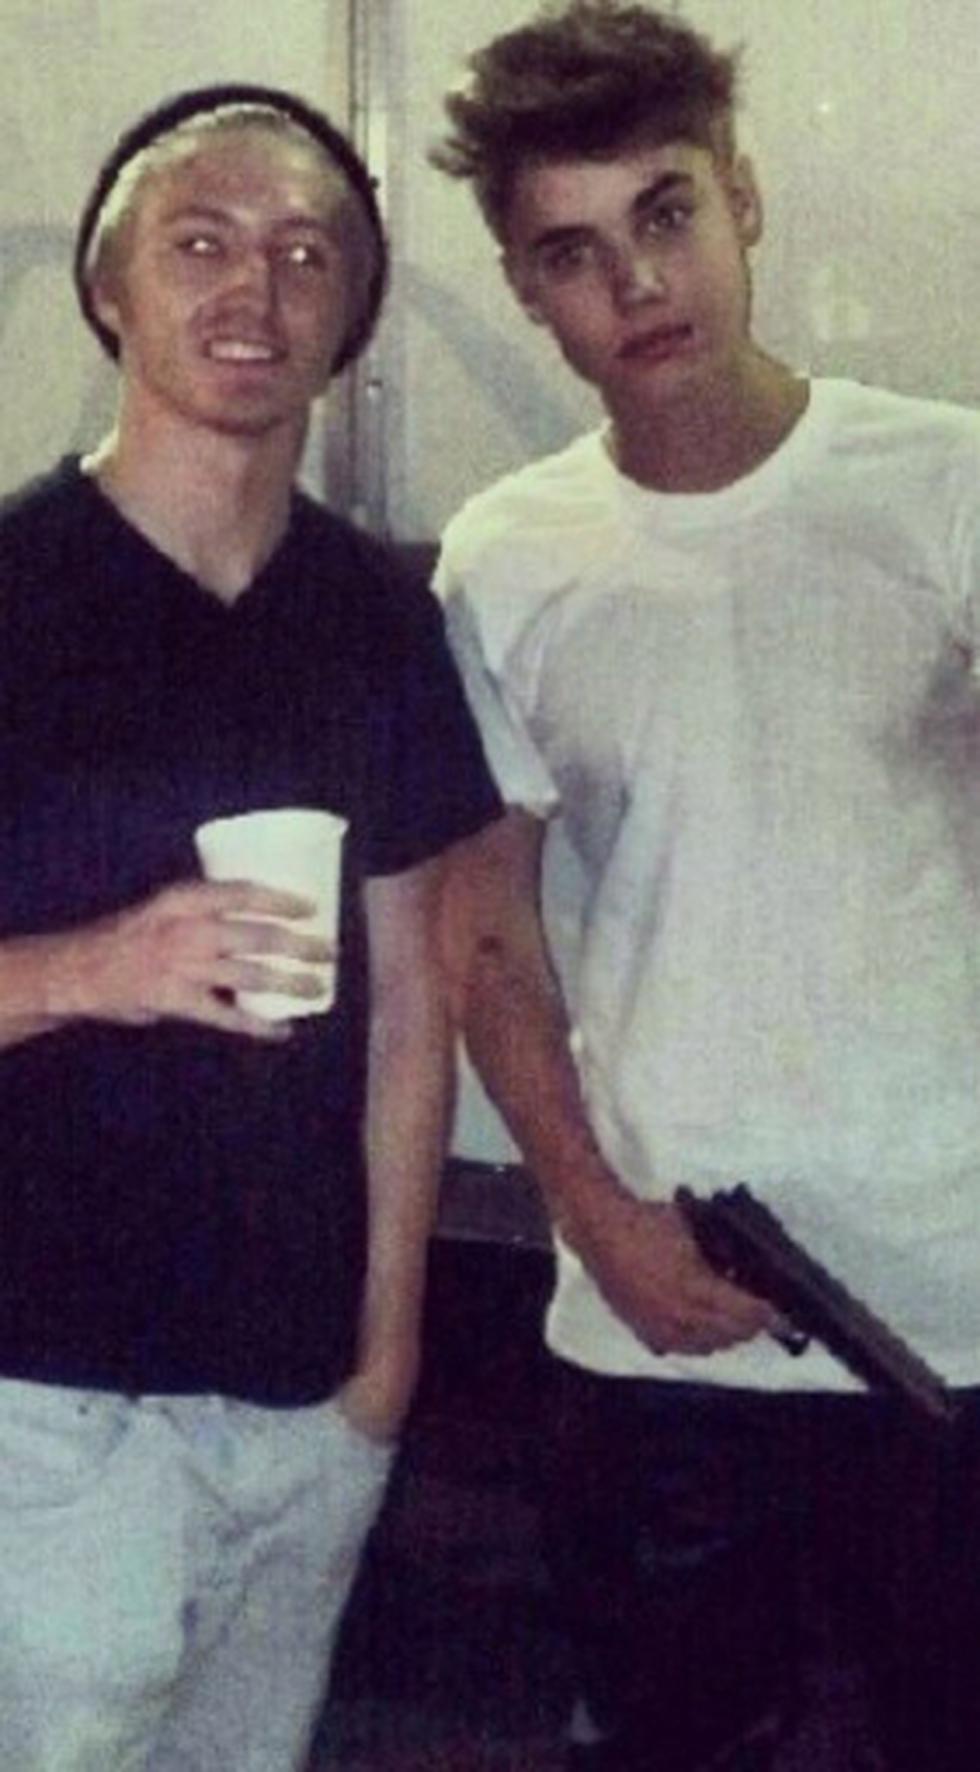 Fotos: Justin Bieber causa polémica al posar con un arma junto a Selena Gomez